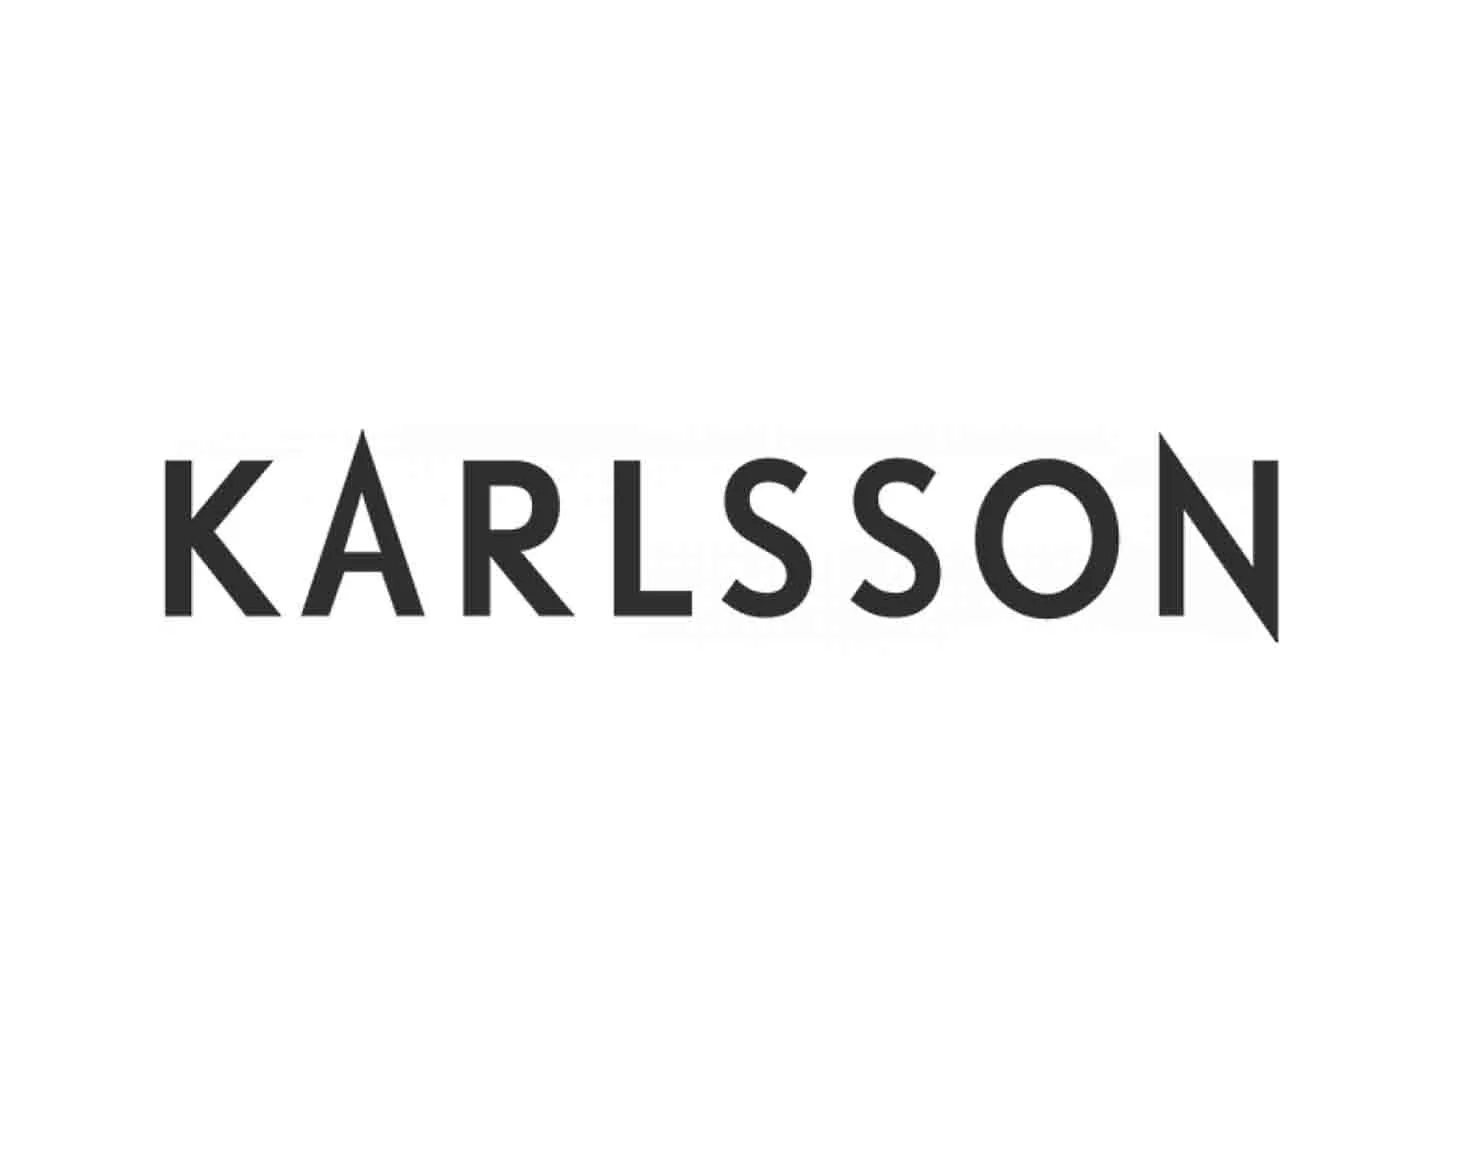 karlsson logo